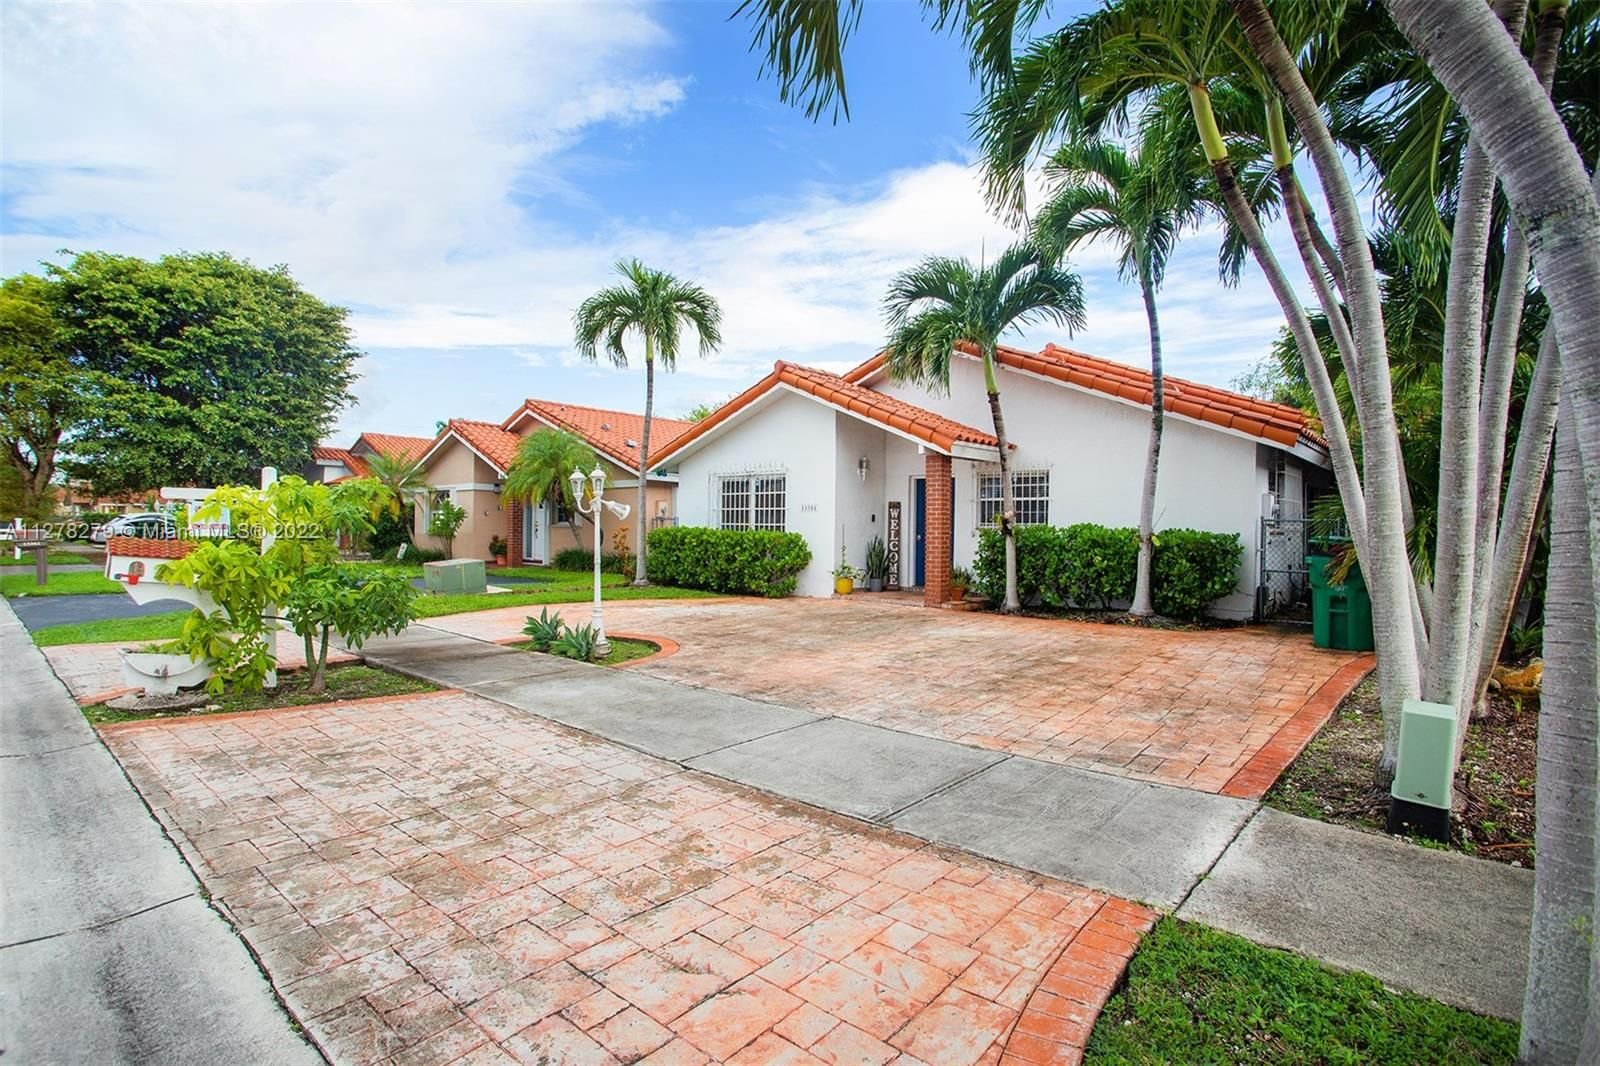 Real estate property located at 13351 27th St, Miami-Dade County, Miami, FL